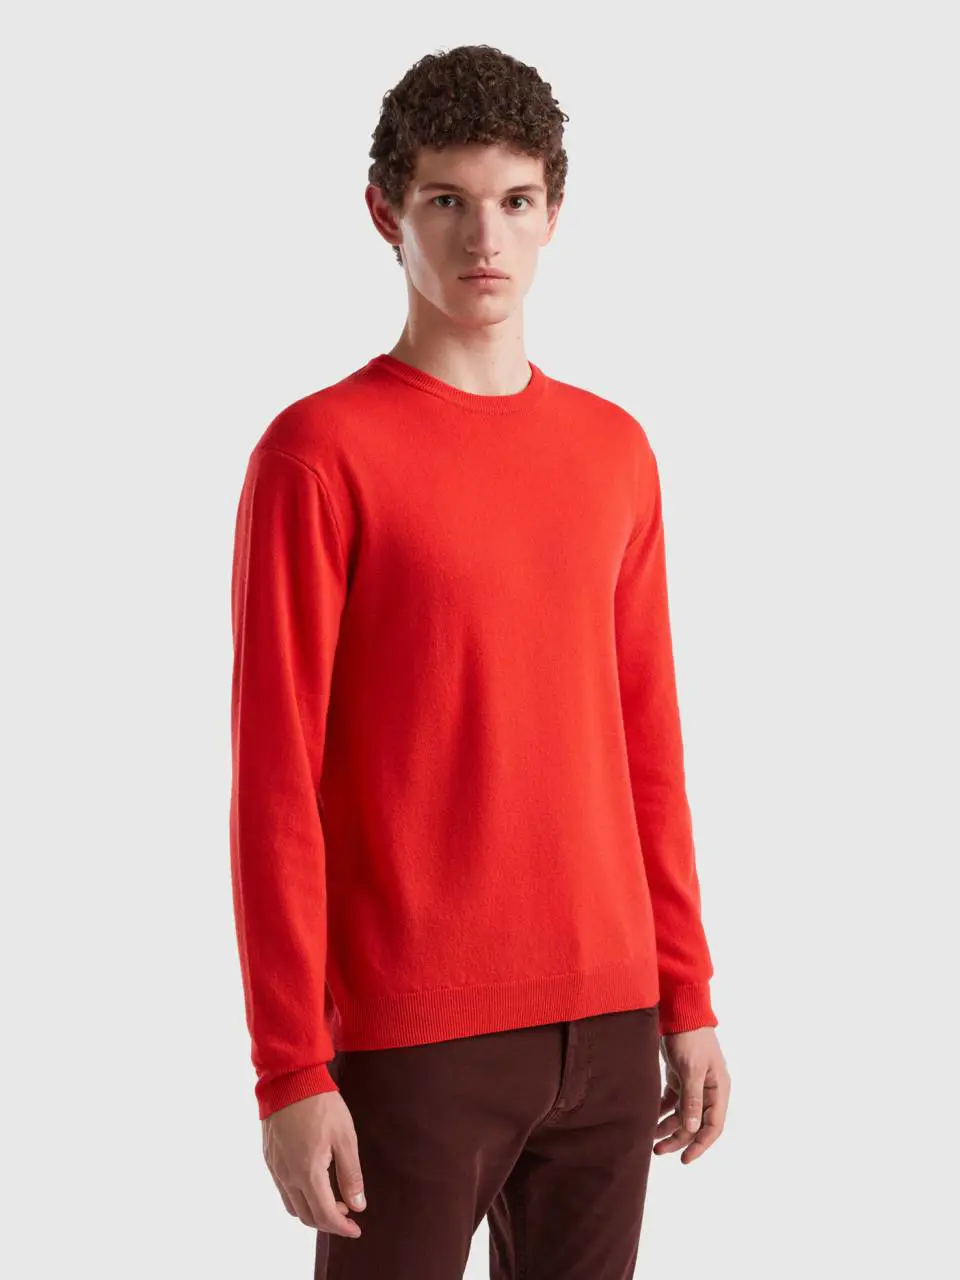 Benetton red crew neck sweater in pure merino wool. 1